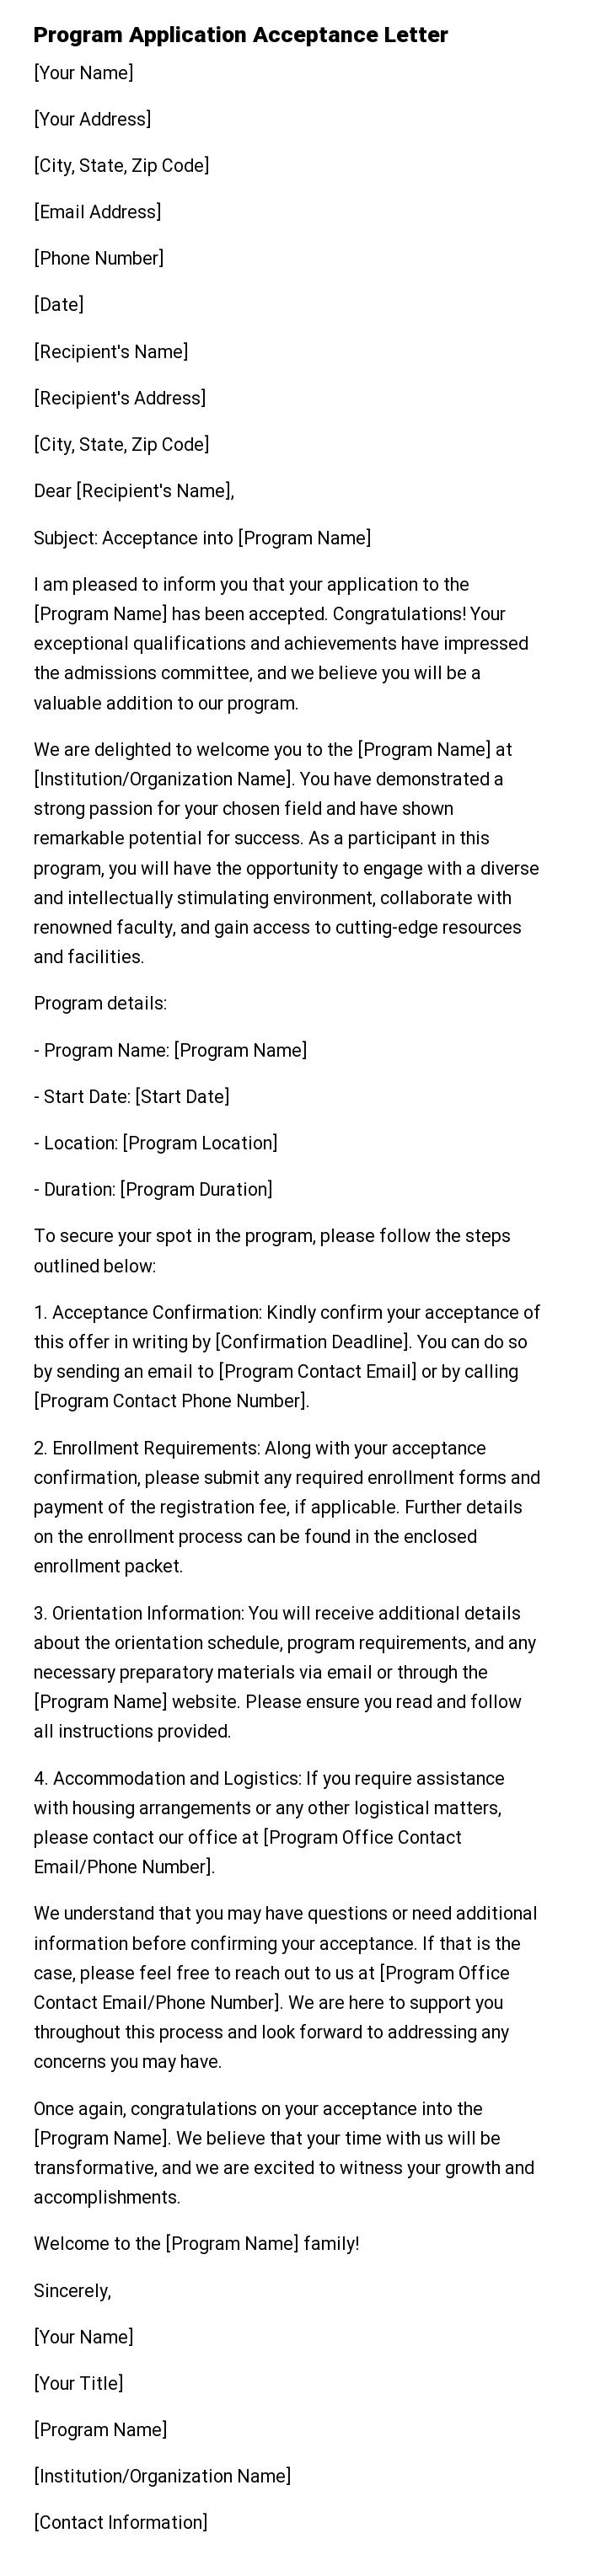 Program Application Acceptance Letter